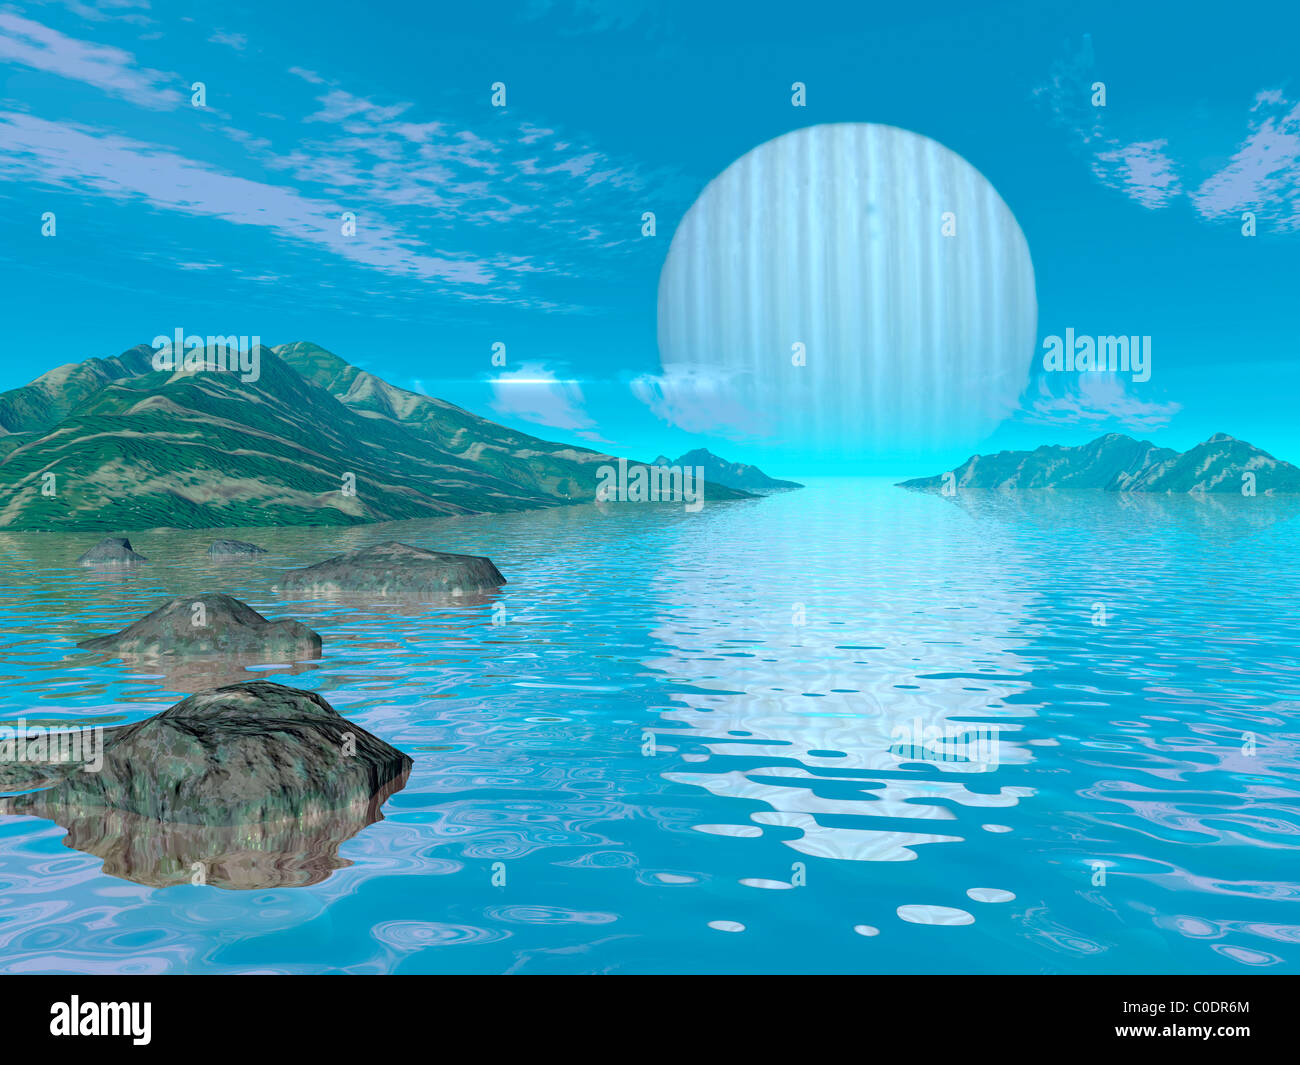 Illustration of a hypothetical idyllic landscape on a distant alien planet. Stock Photo